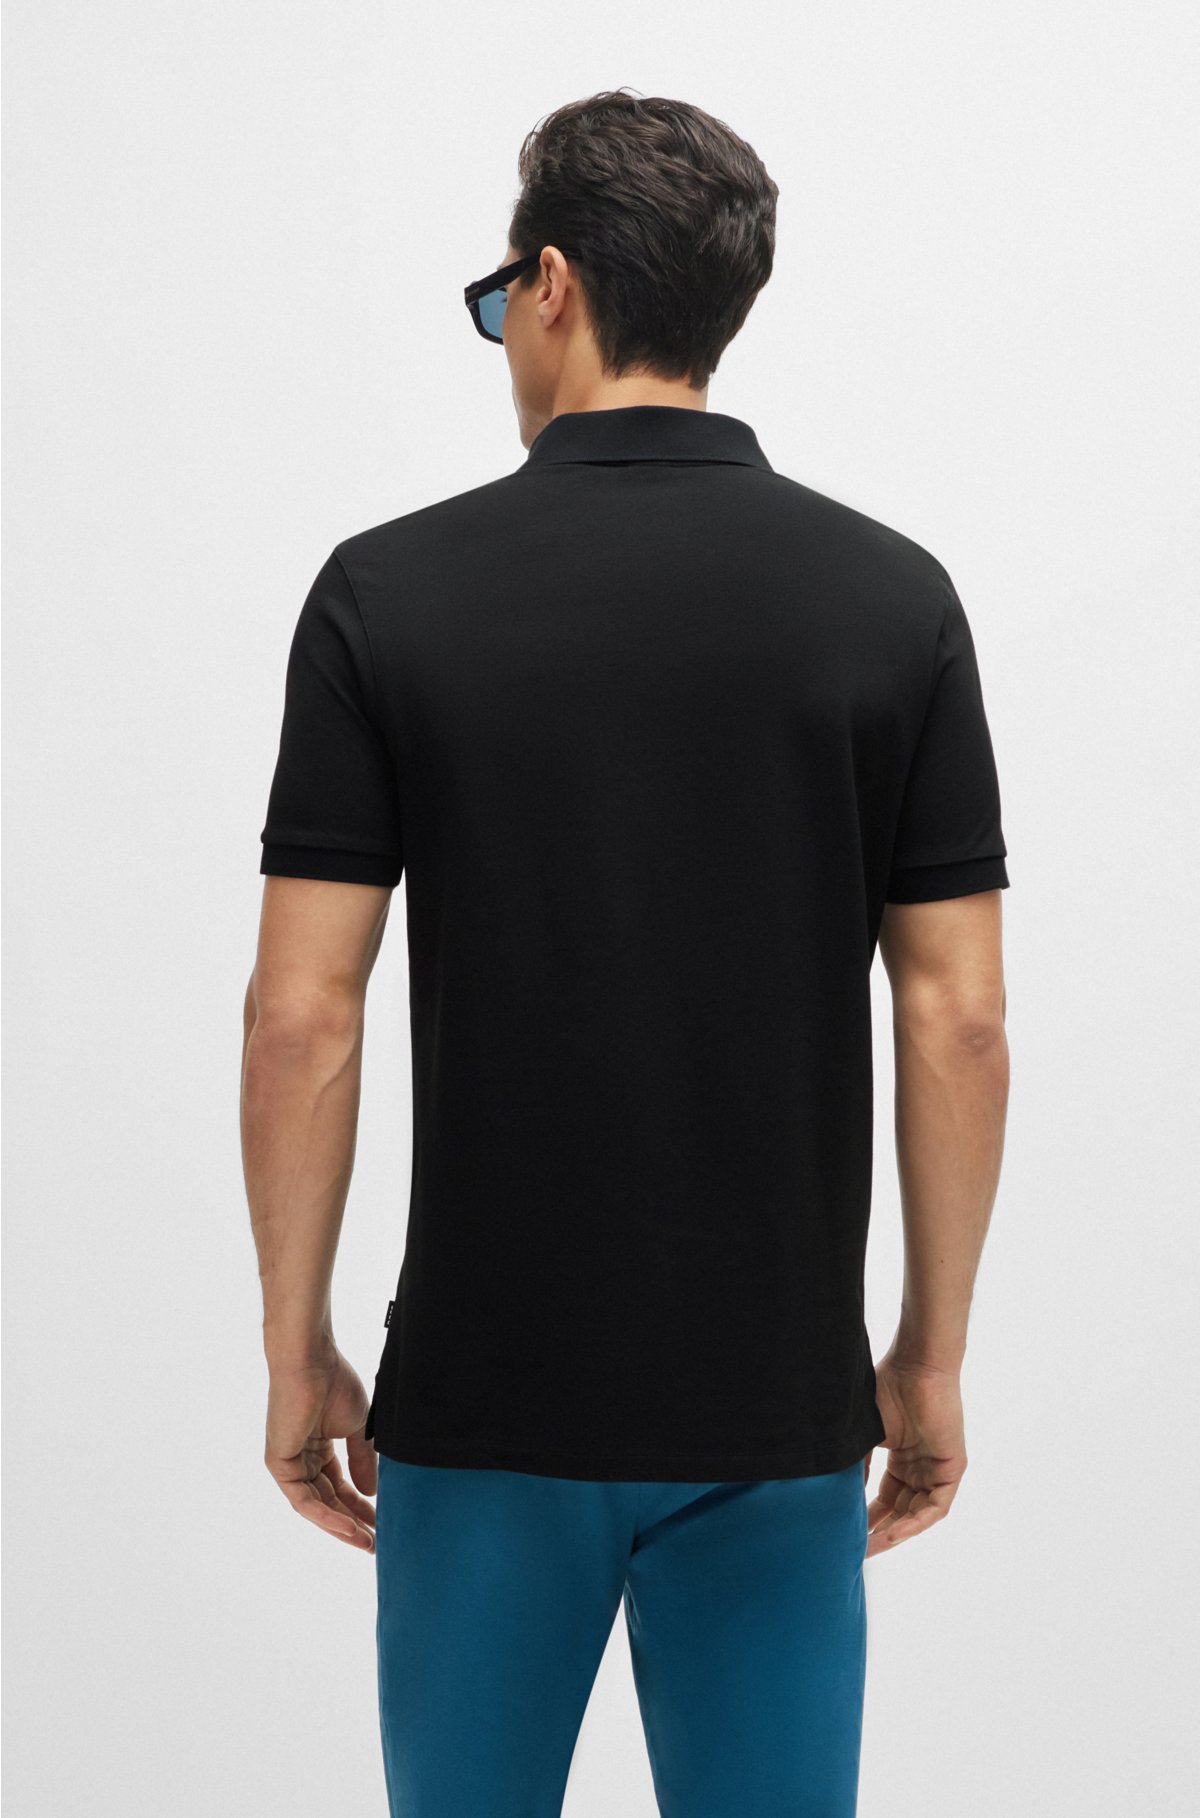 Signature Organic Cotton Polo - Black  Polo shirt, Black polo shirt, White  polo shirt